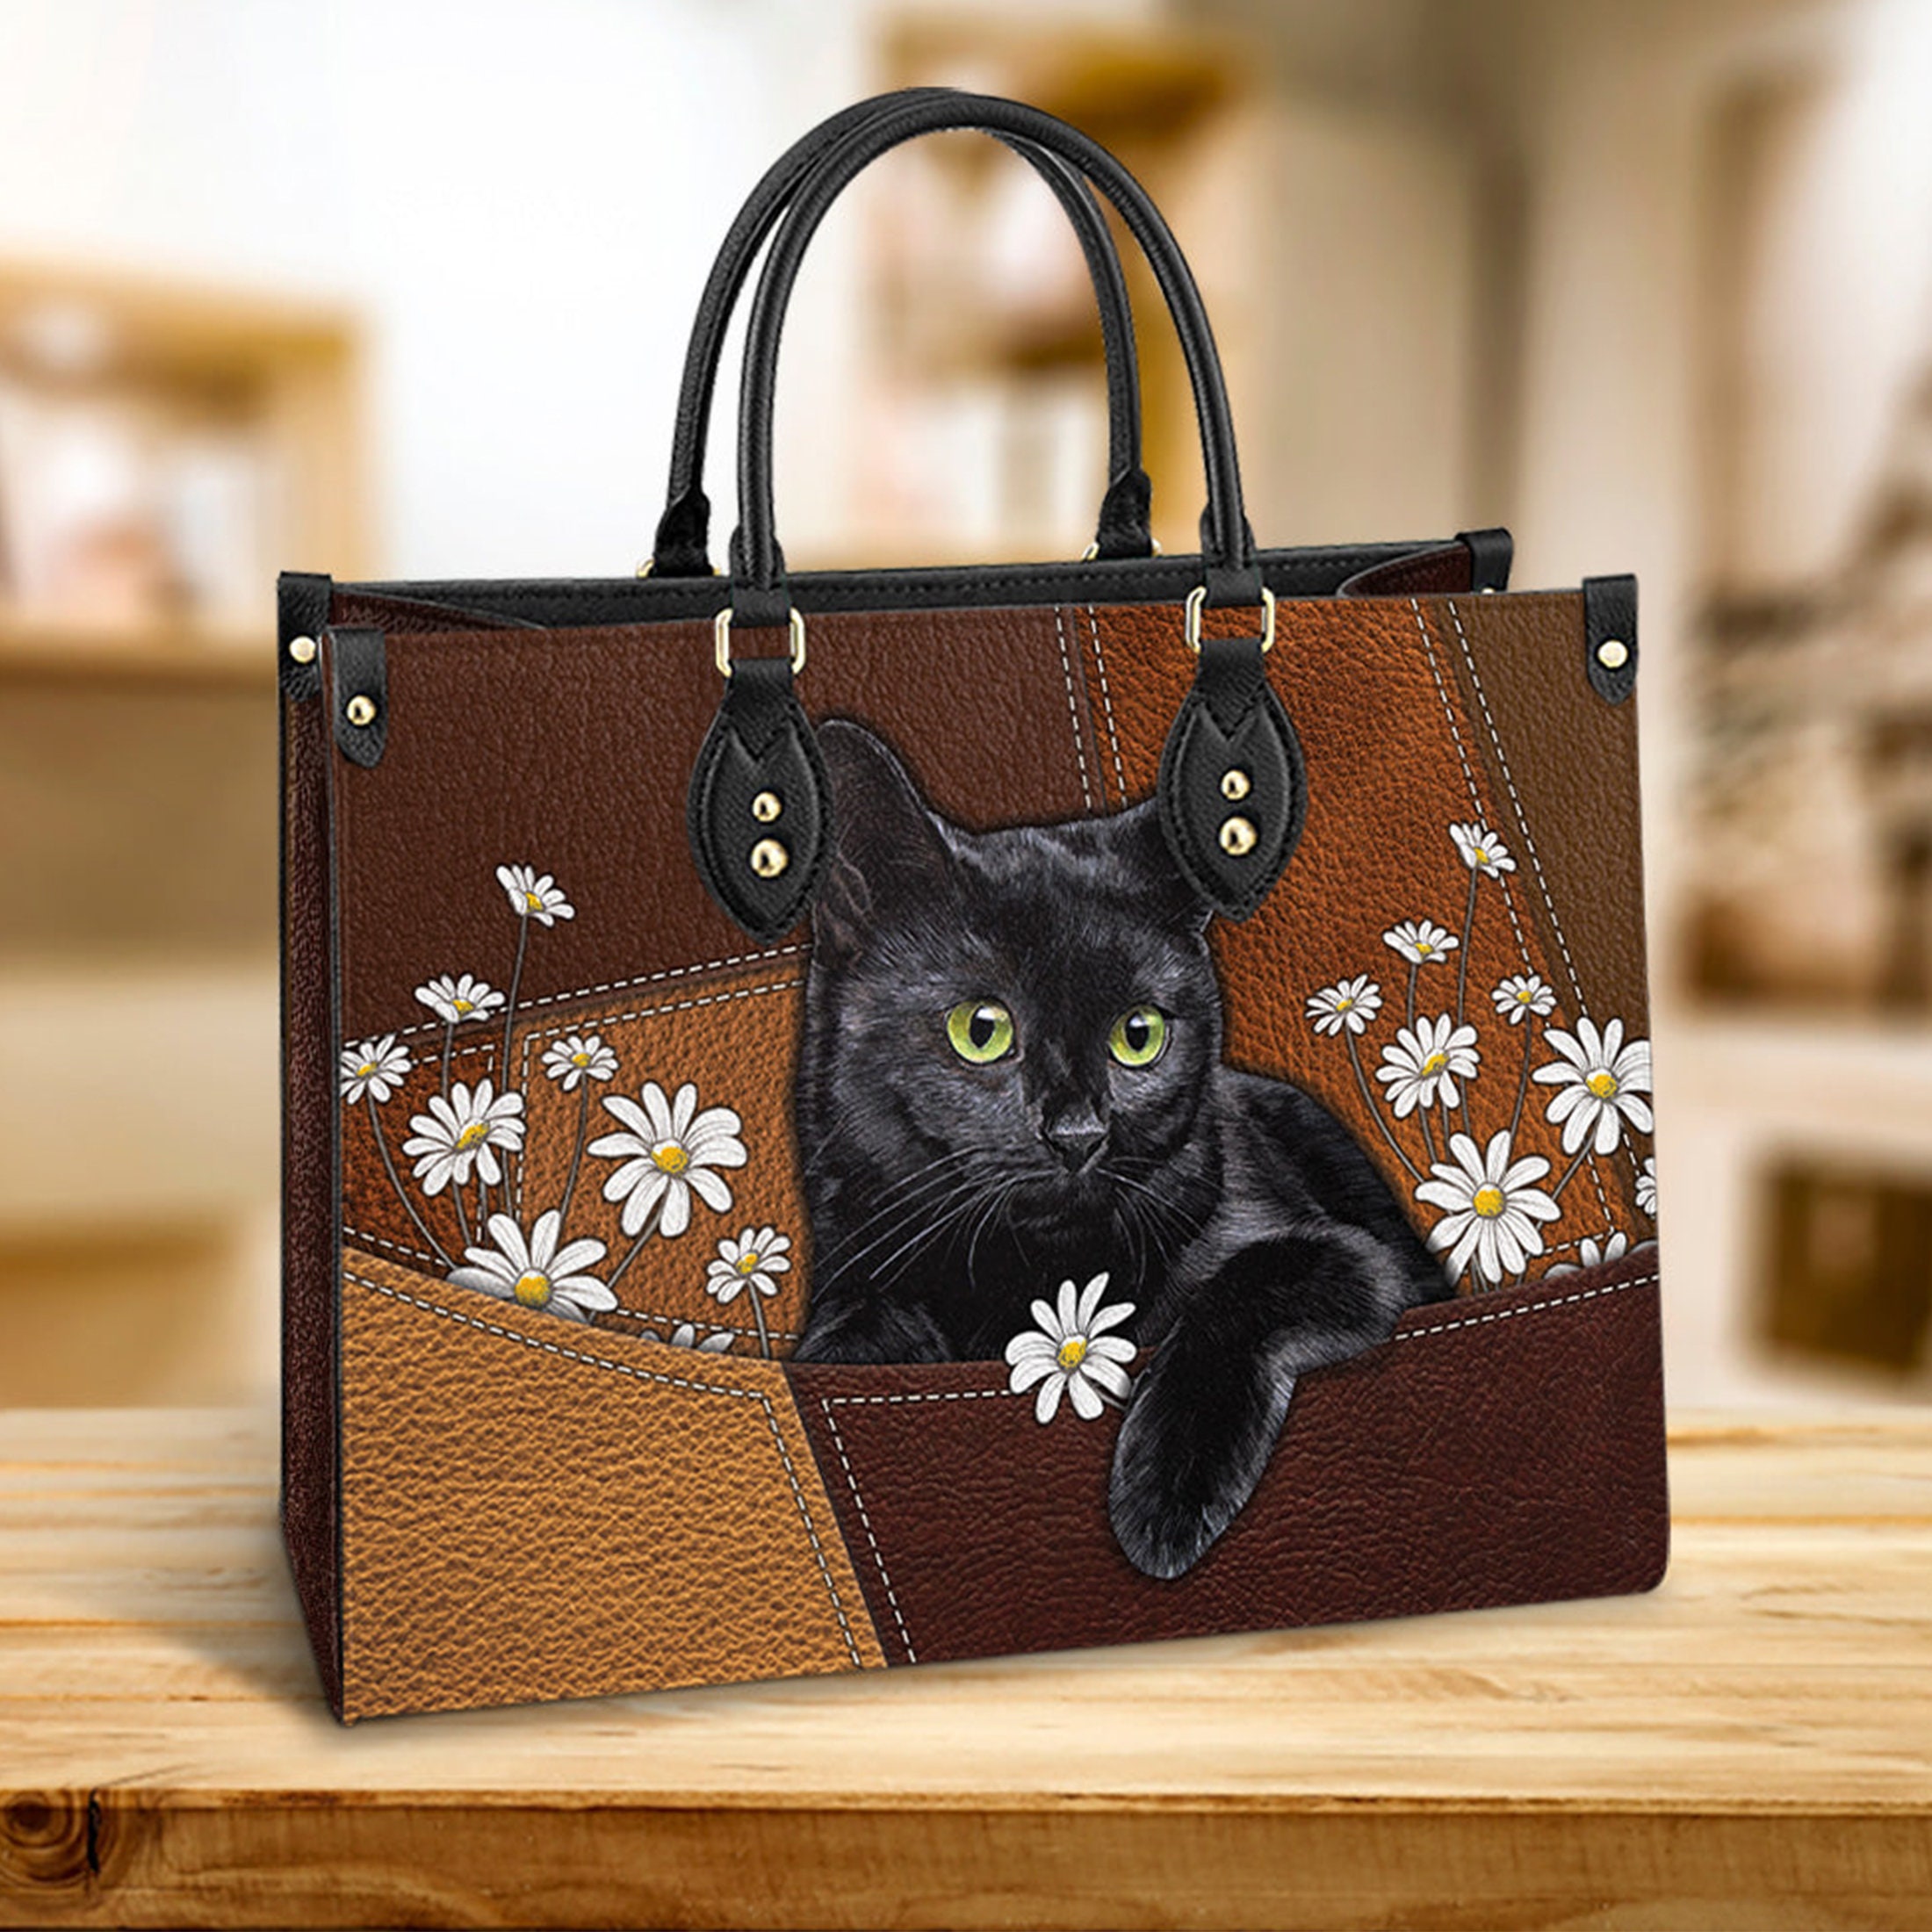 Buy HUIJUFU Realistic Puffy Plush Cat Shaped Crossbody Handbag for Women  Black Cat 122066959118in at Amazonin